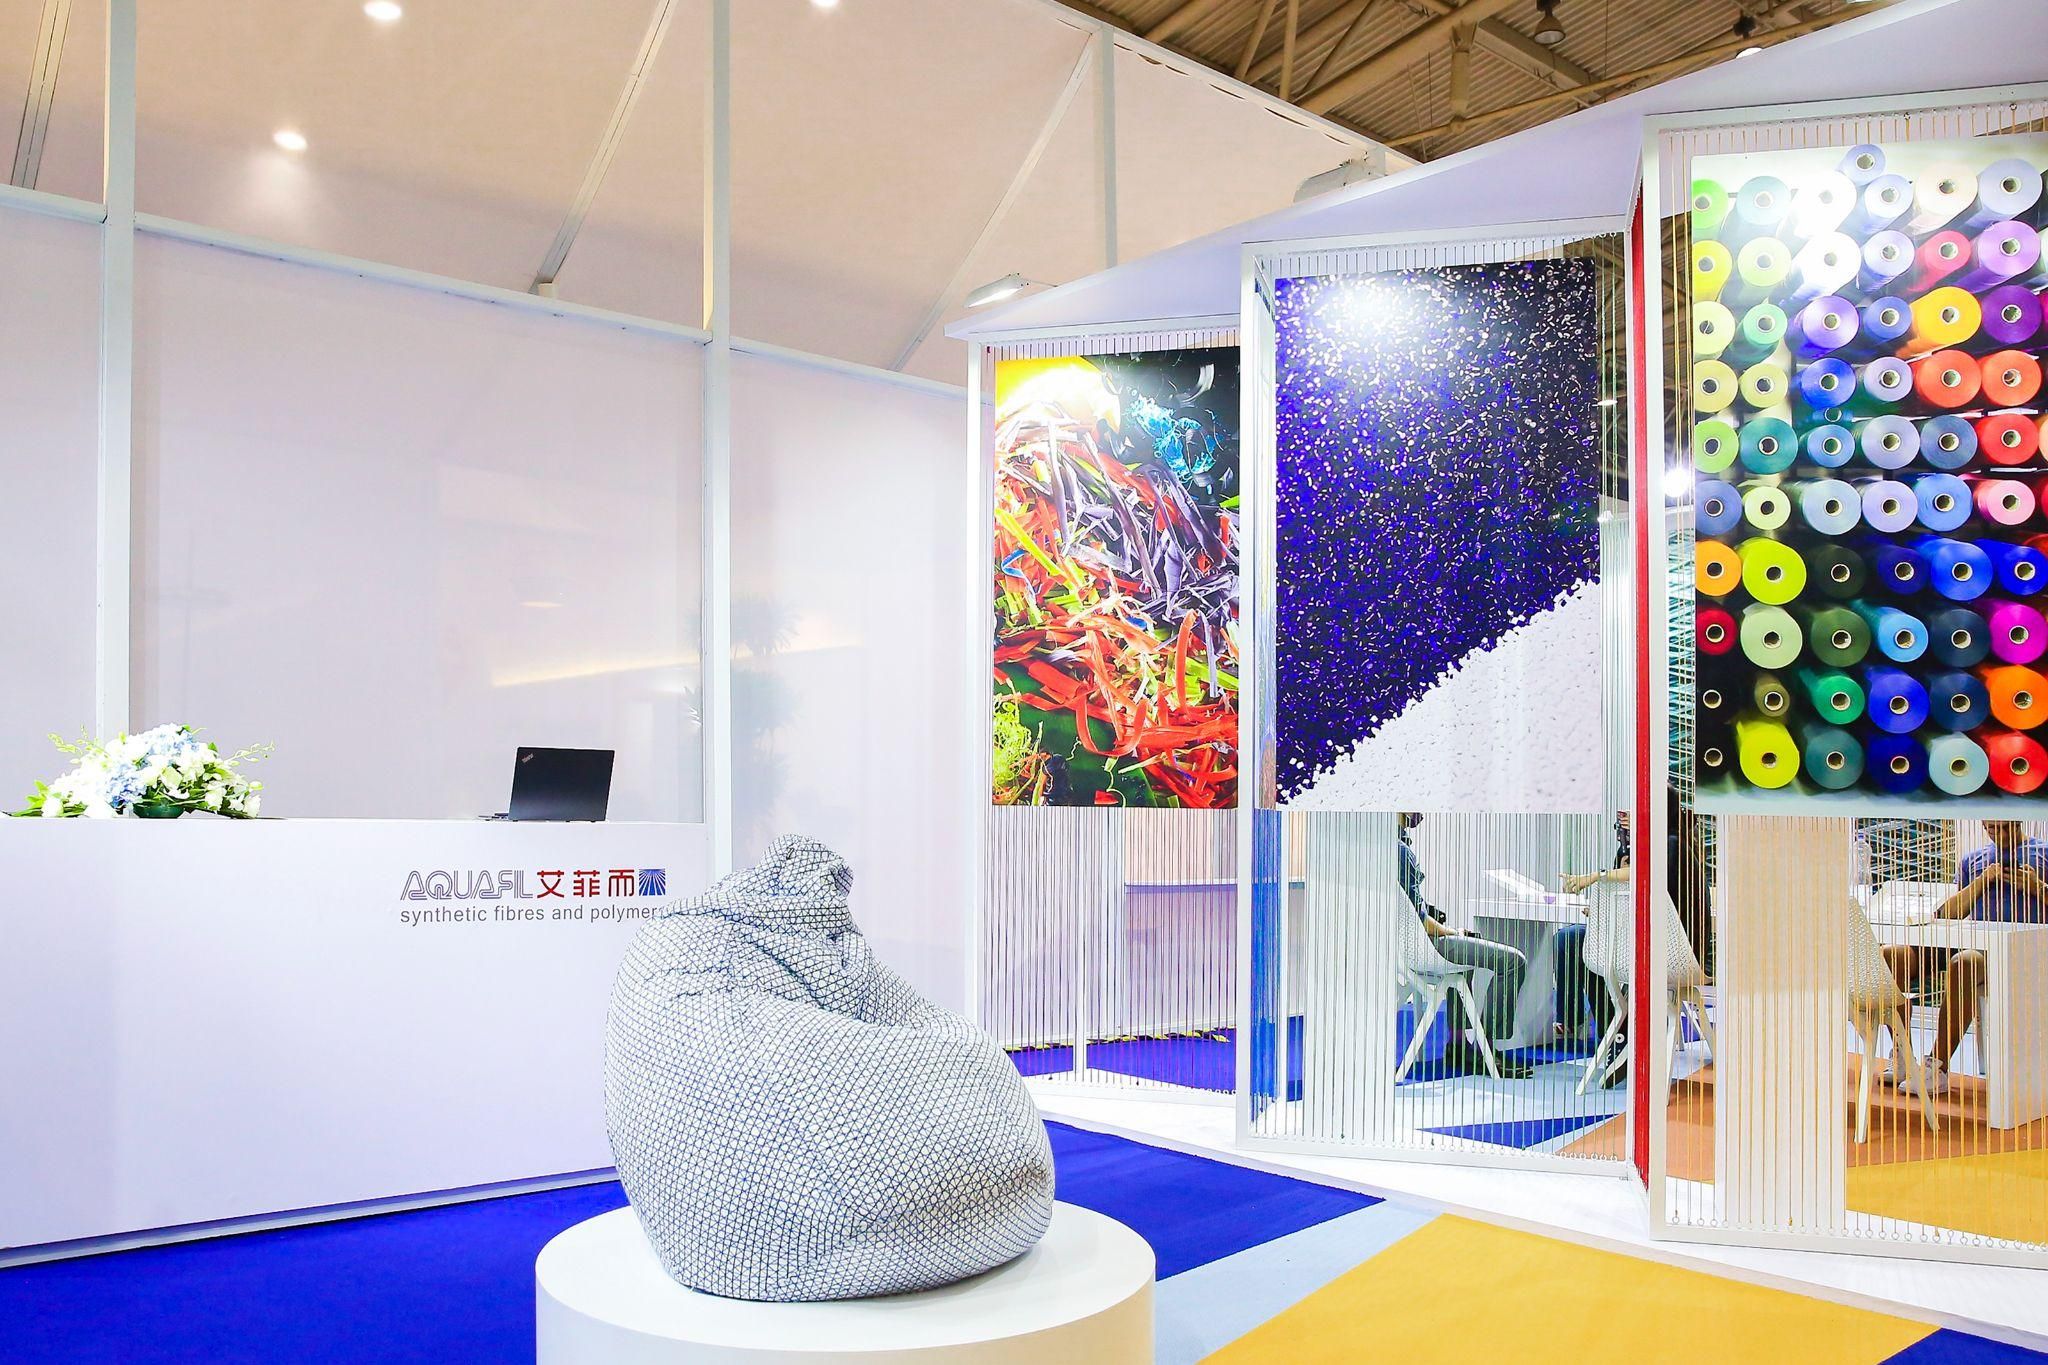 Design China Beijing Exhibitor, ECONYL® presented by Aquafil